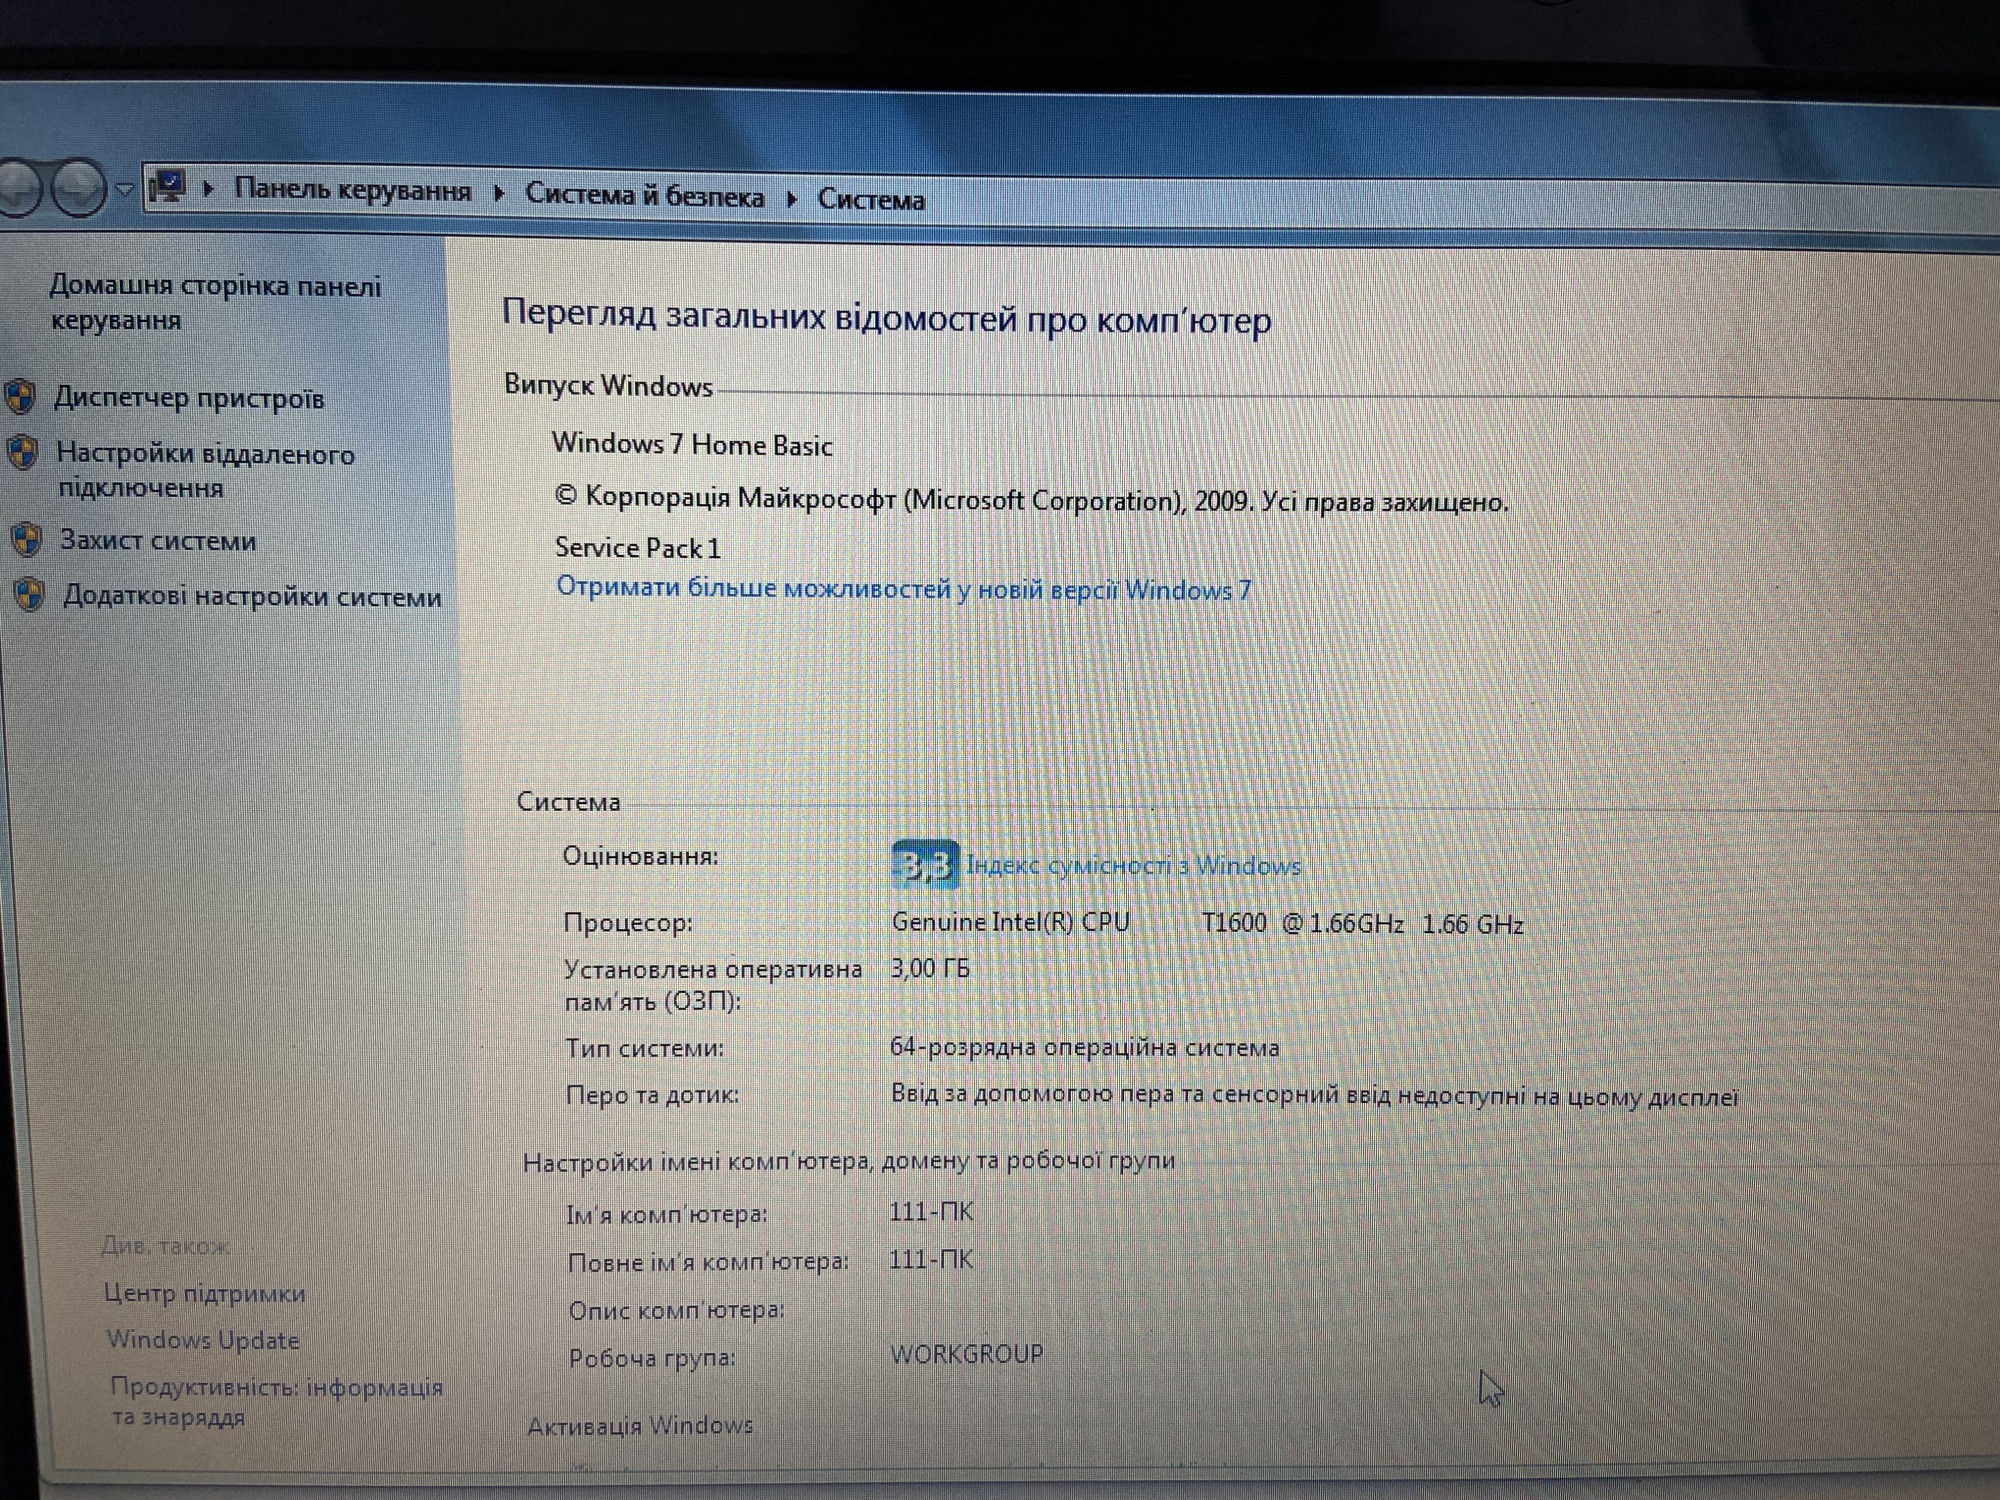 Ноутбук eMachines E525 (Intel Celeron T1600/2Gb/HDD160Gb) (33142021) 1